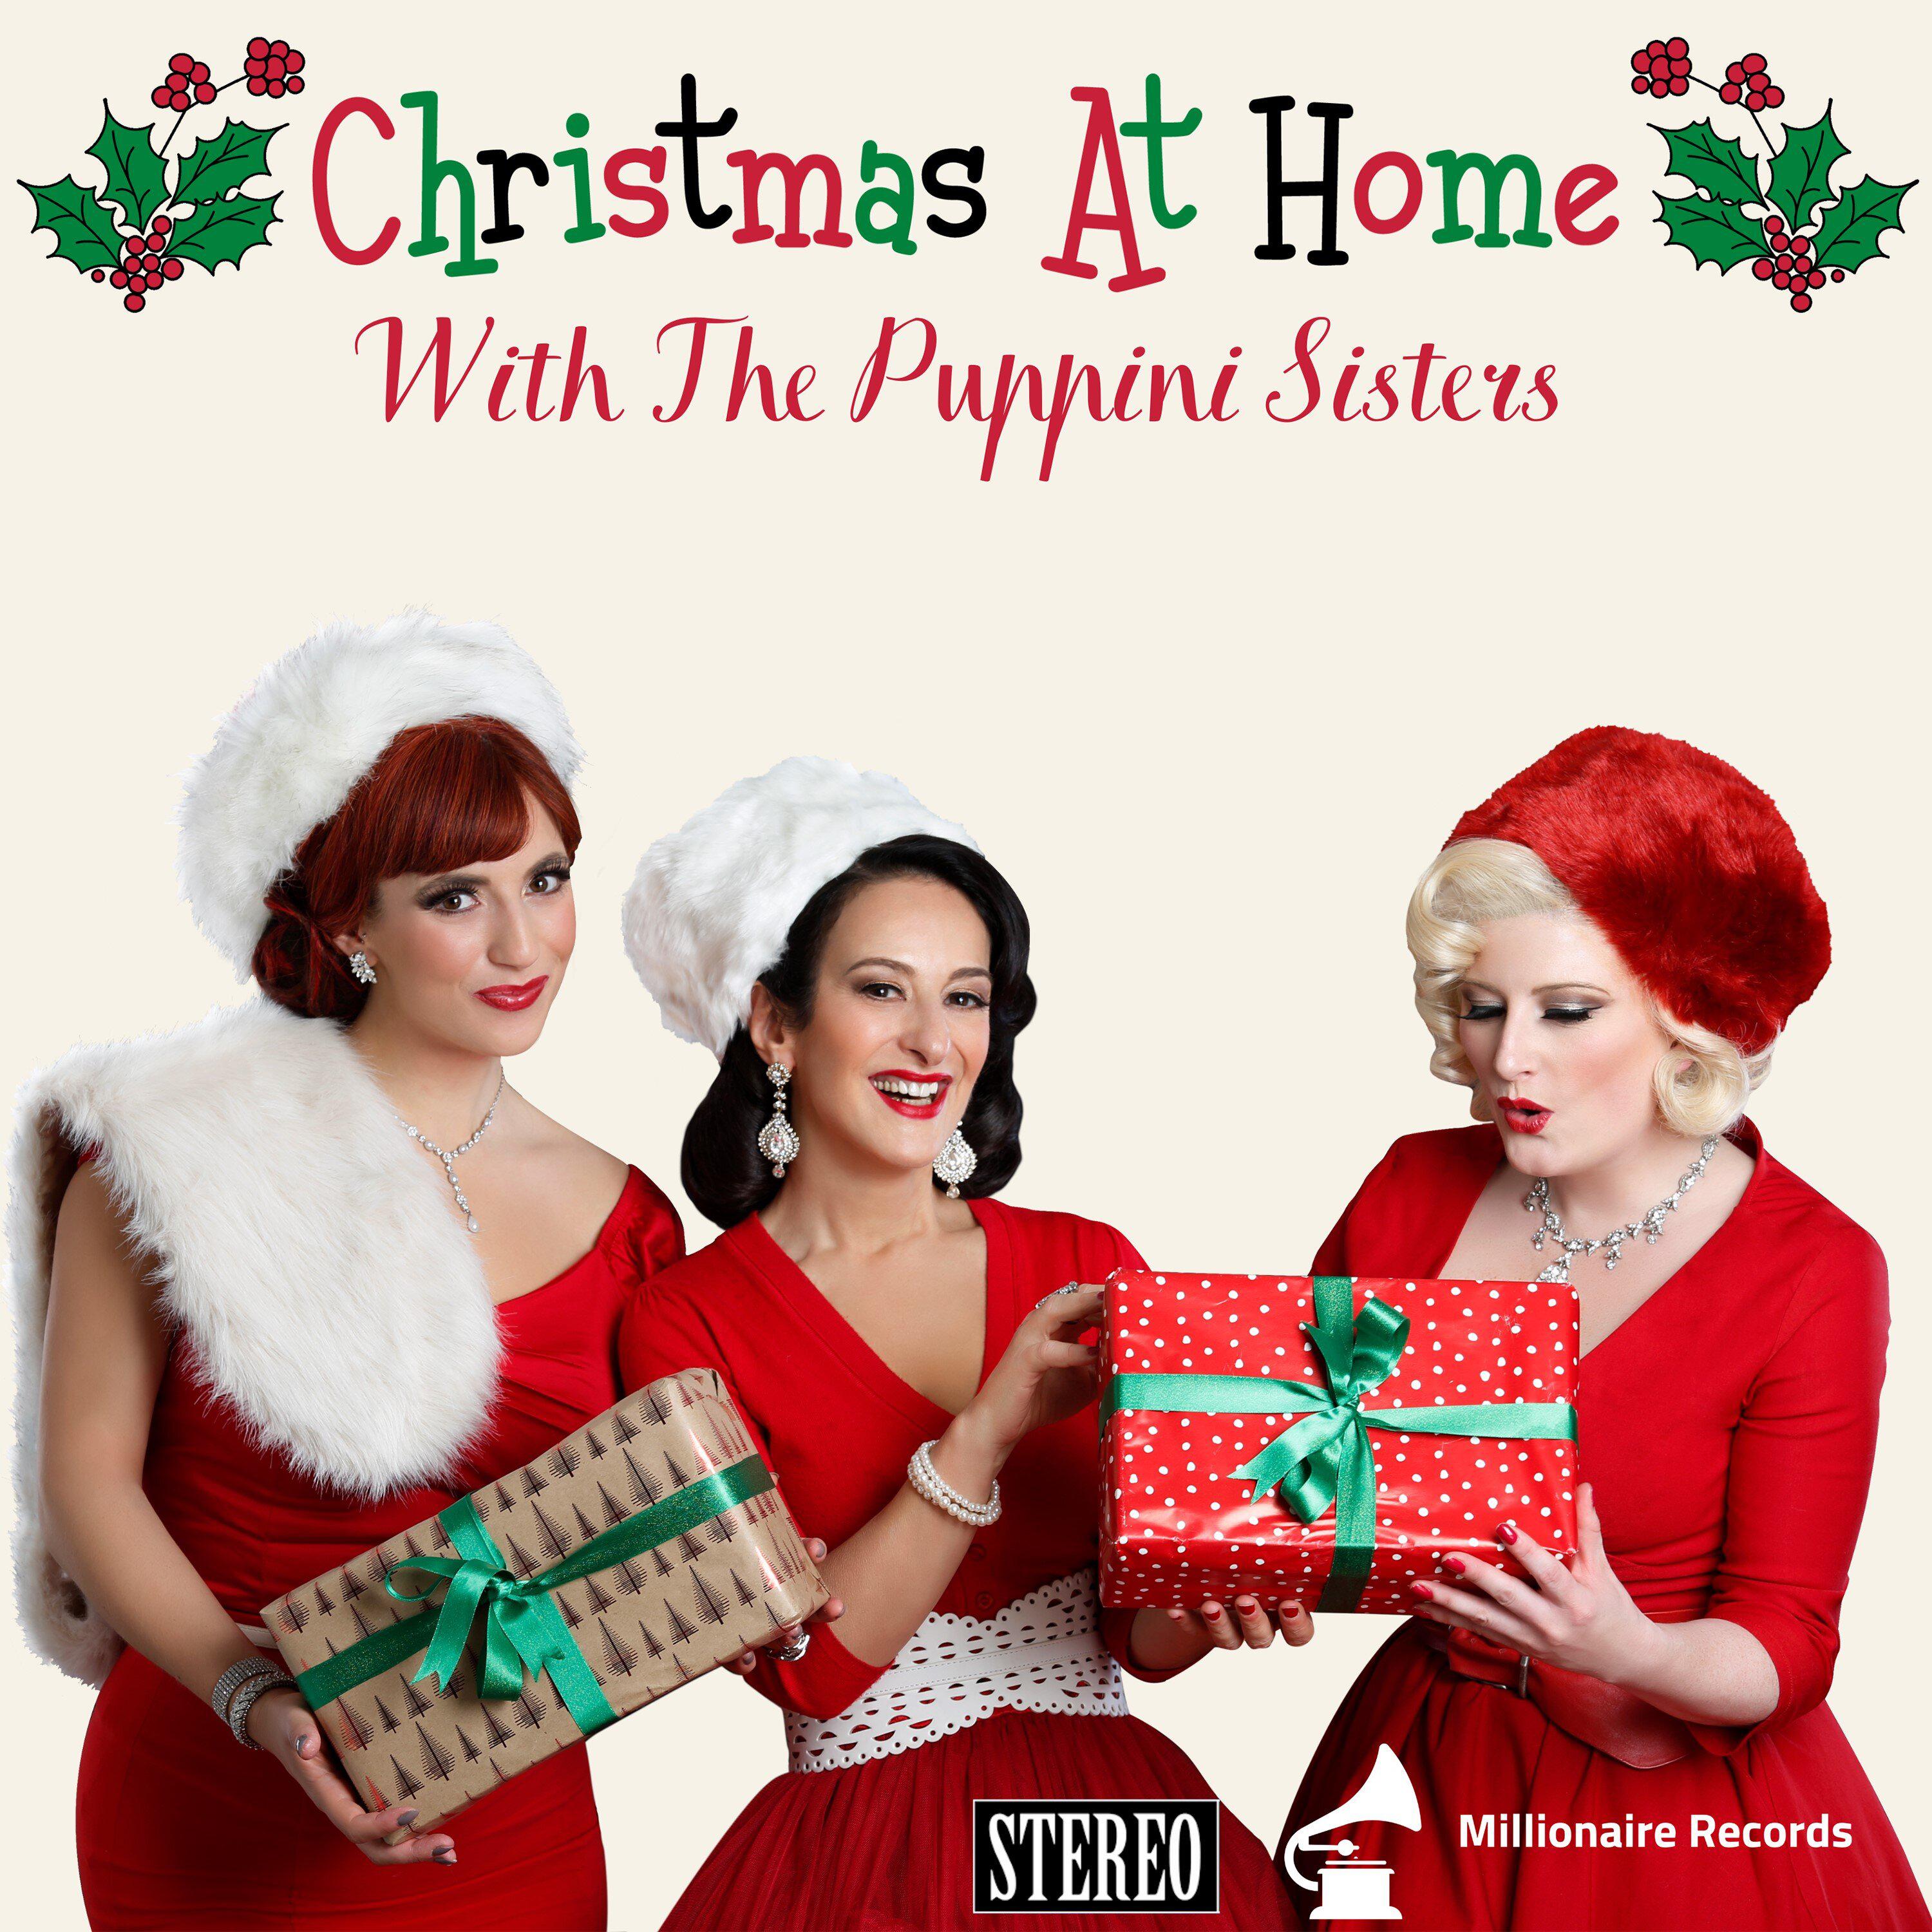 The Puppini Sisters - Jingle Bells